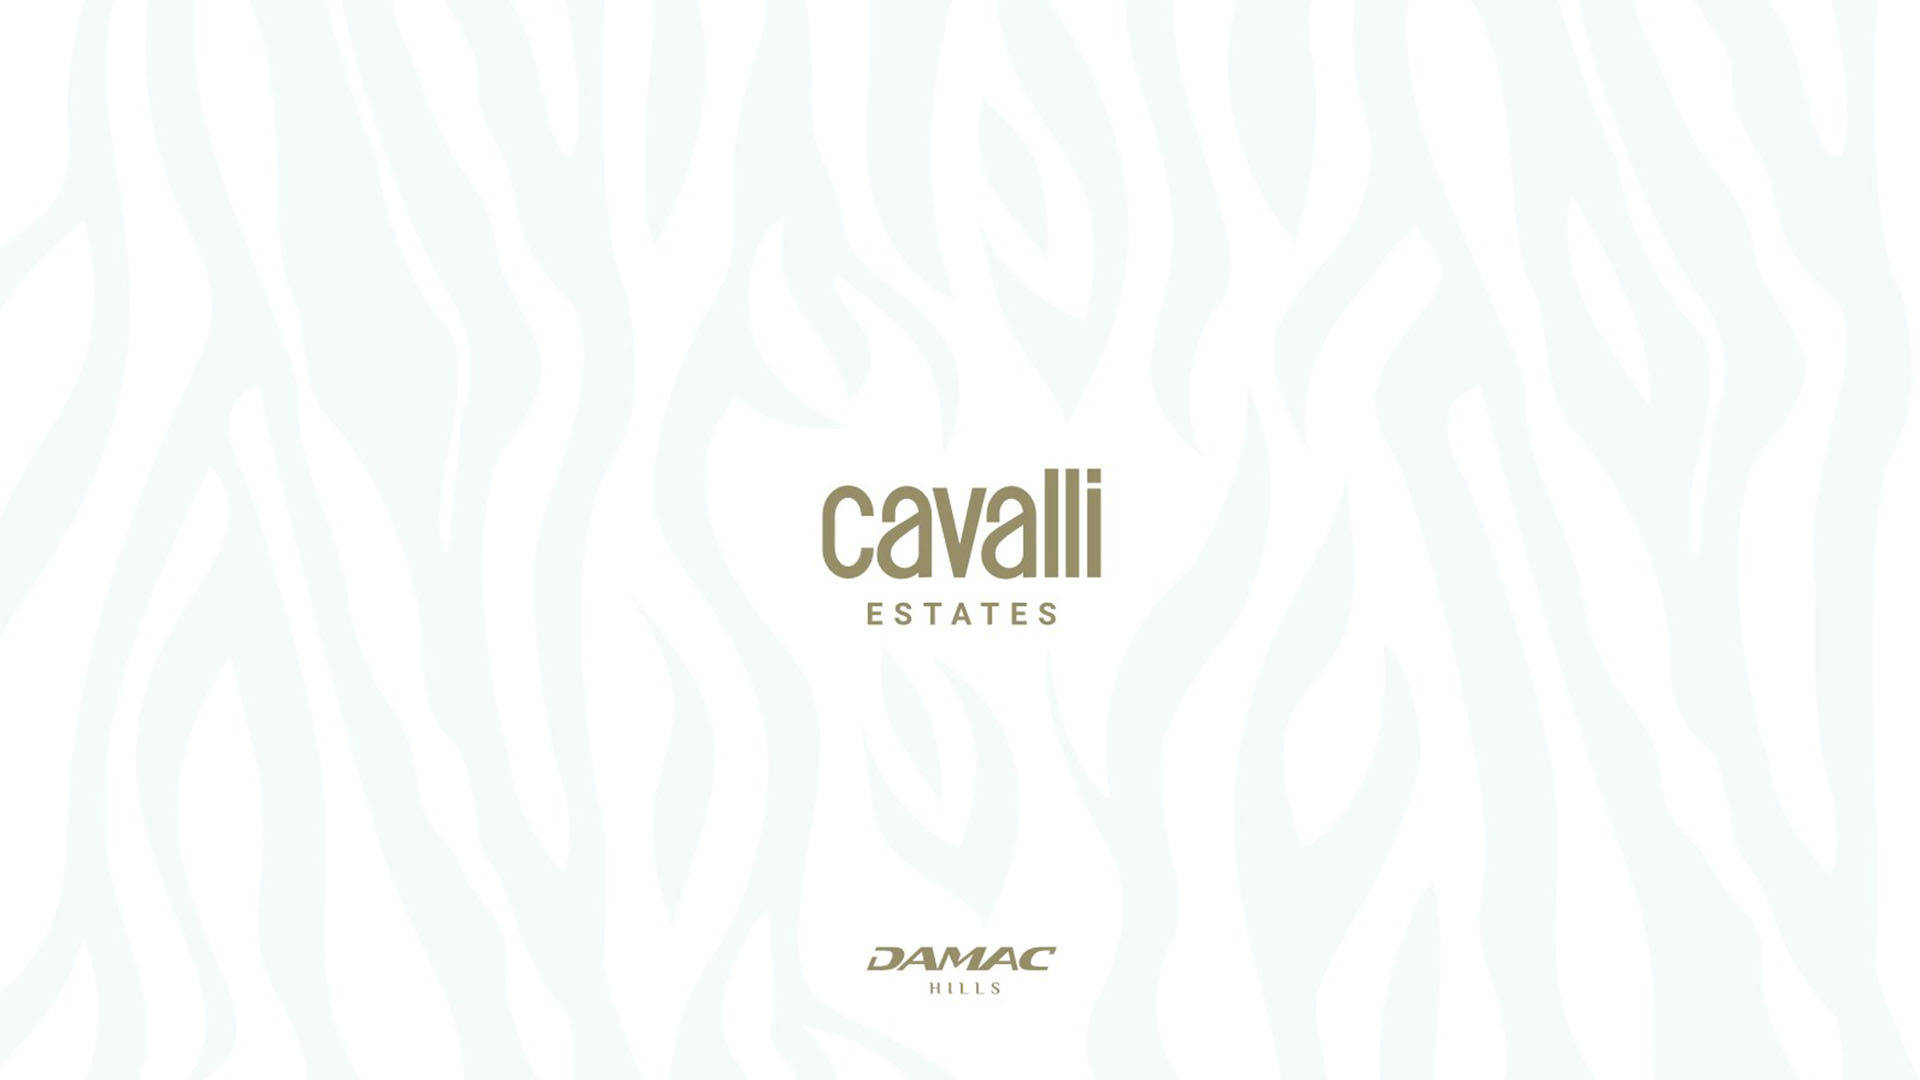 CAVALLI ESTATES by Damac Properties in DAMAC Hills, Dubai, UAE - 8